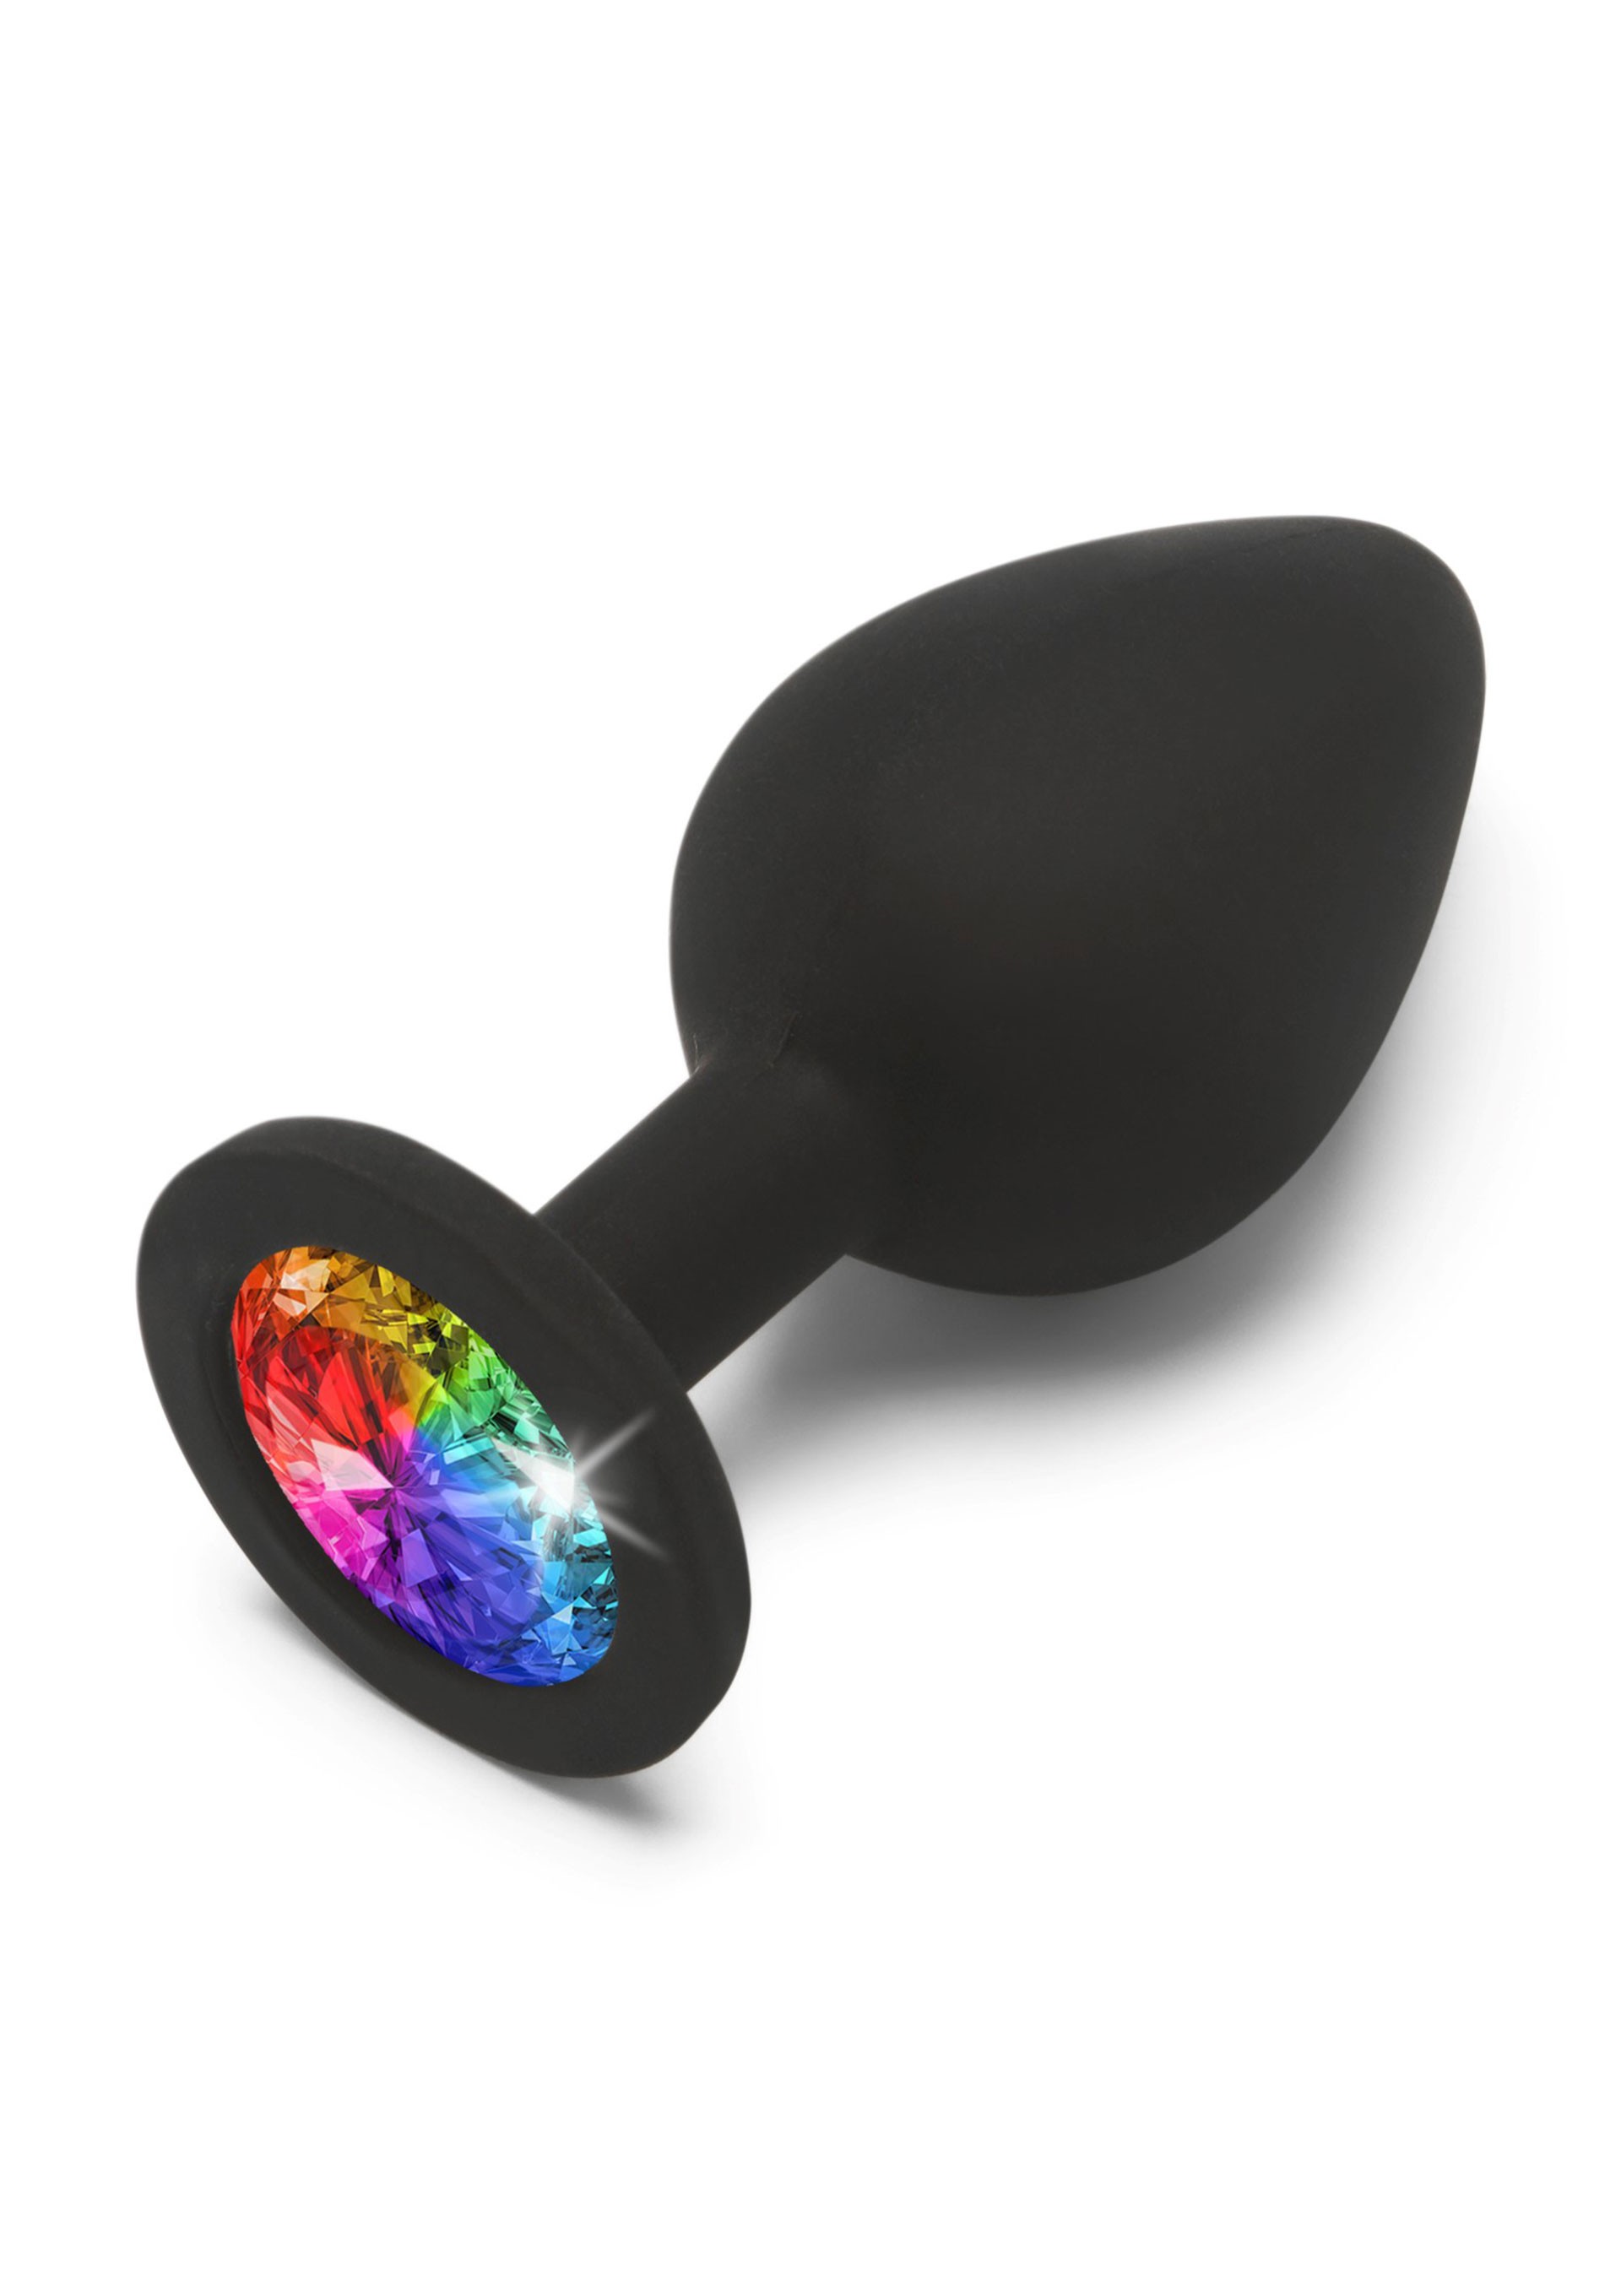 Toy Joy Rainbow Booty Jewel Medium Anal Plug